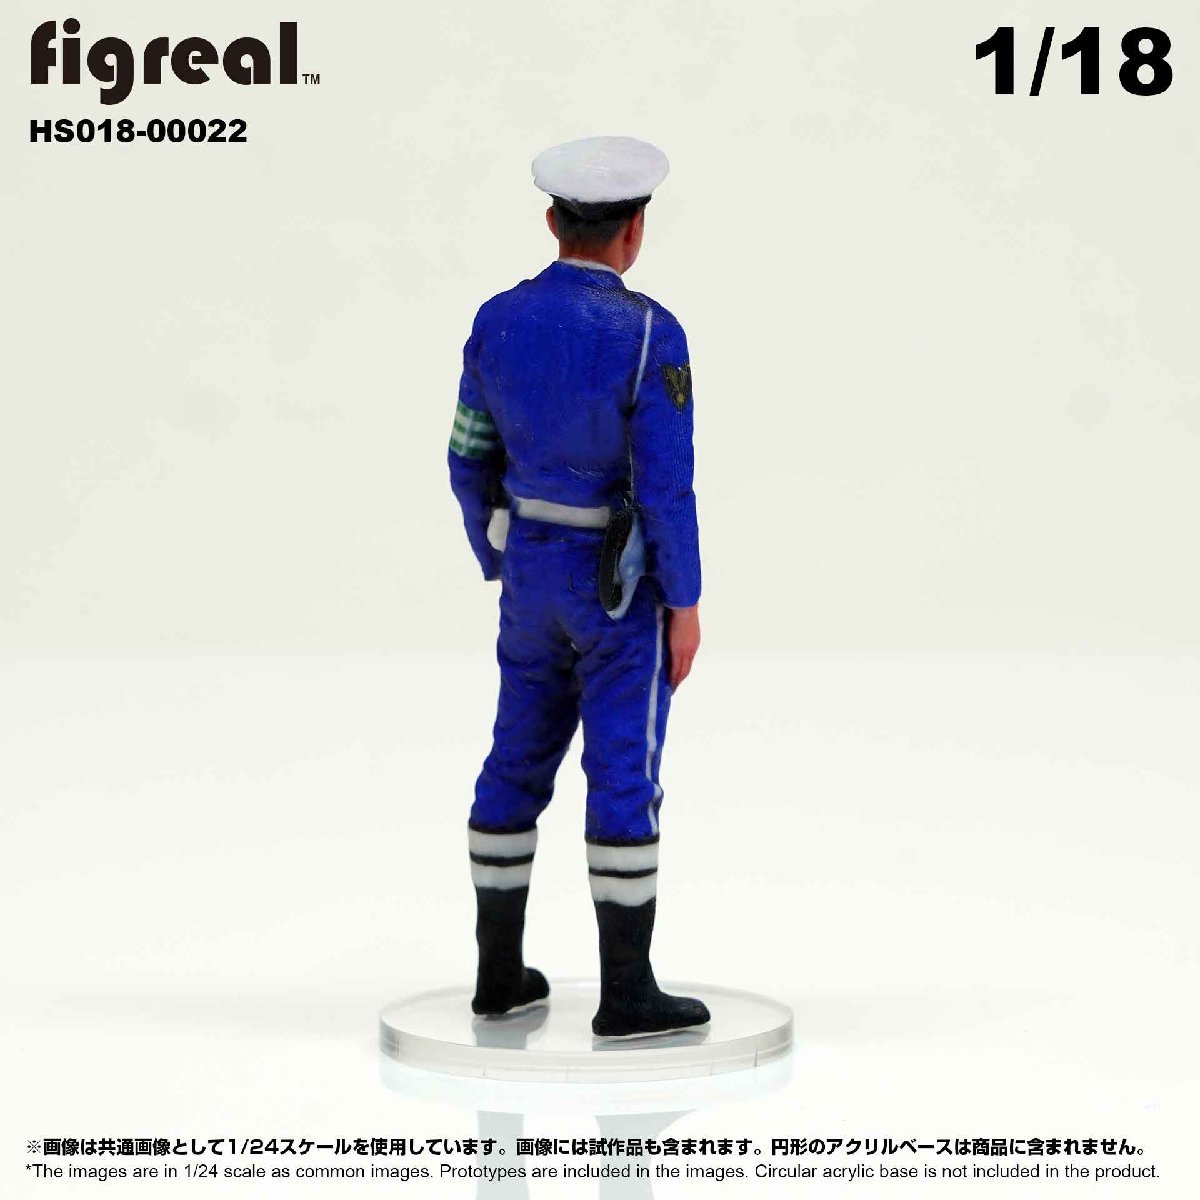 HS018-00022 figreal 日本交通機動隊 1/18 高精細フィギュア_画像5